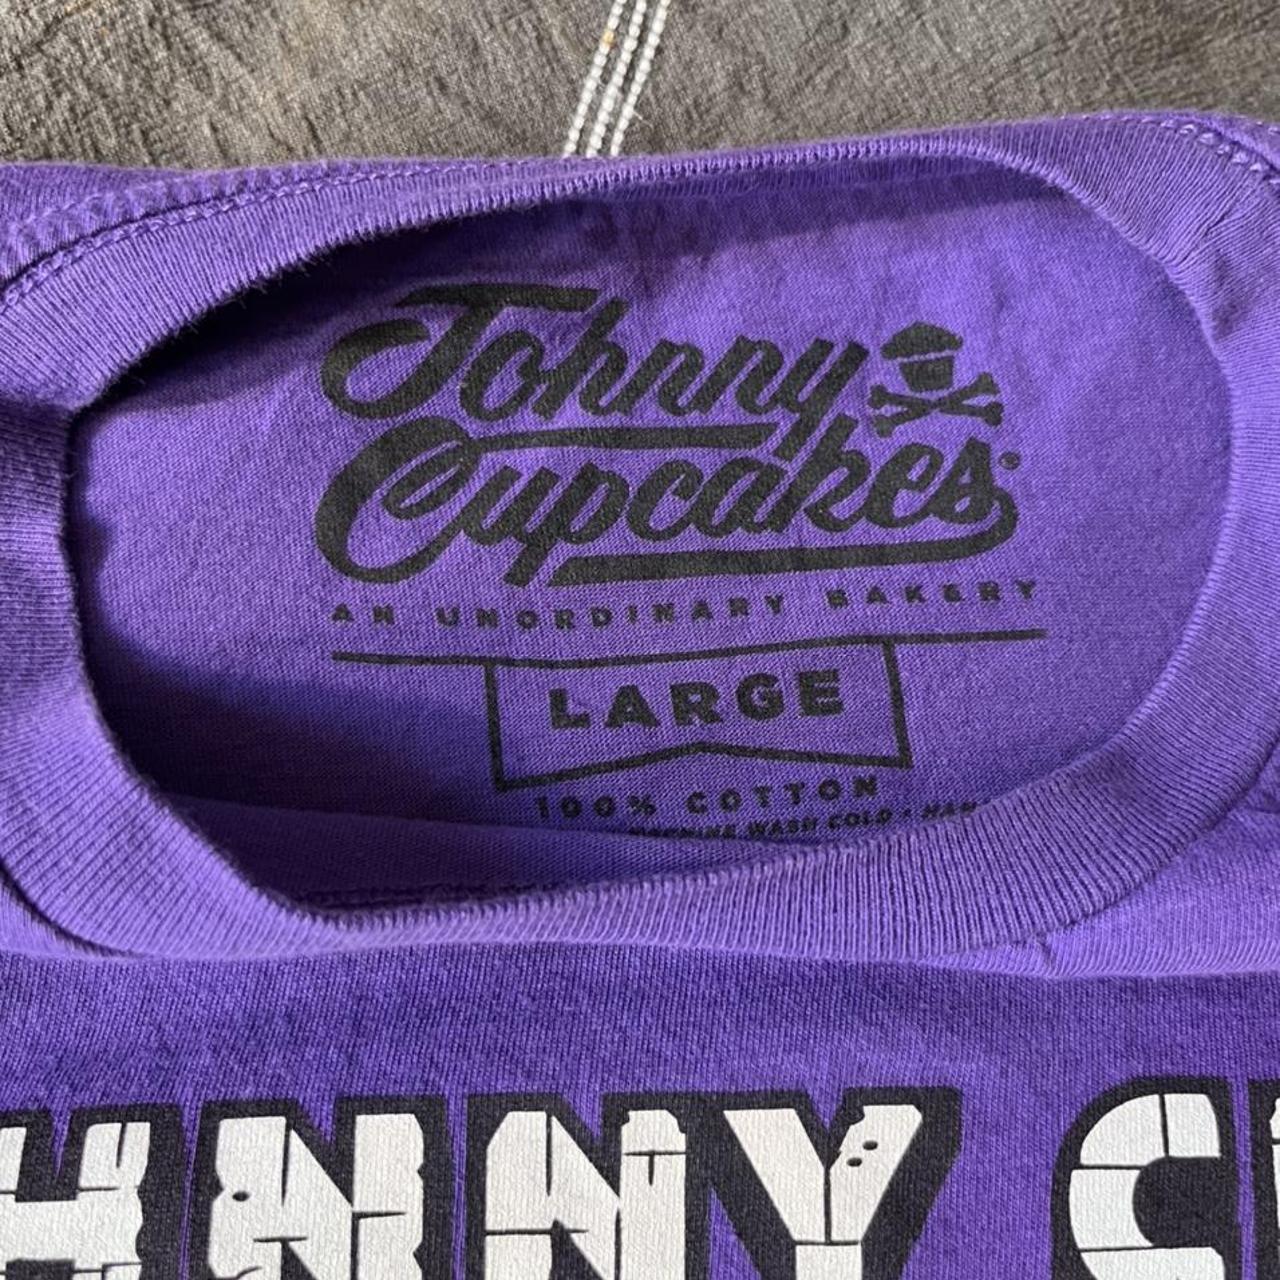 Product Image 3 - Johnny Cupcakes “Hulk cake” t